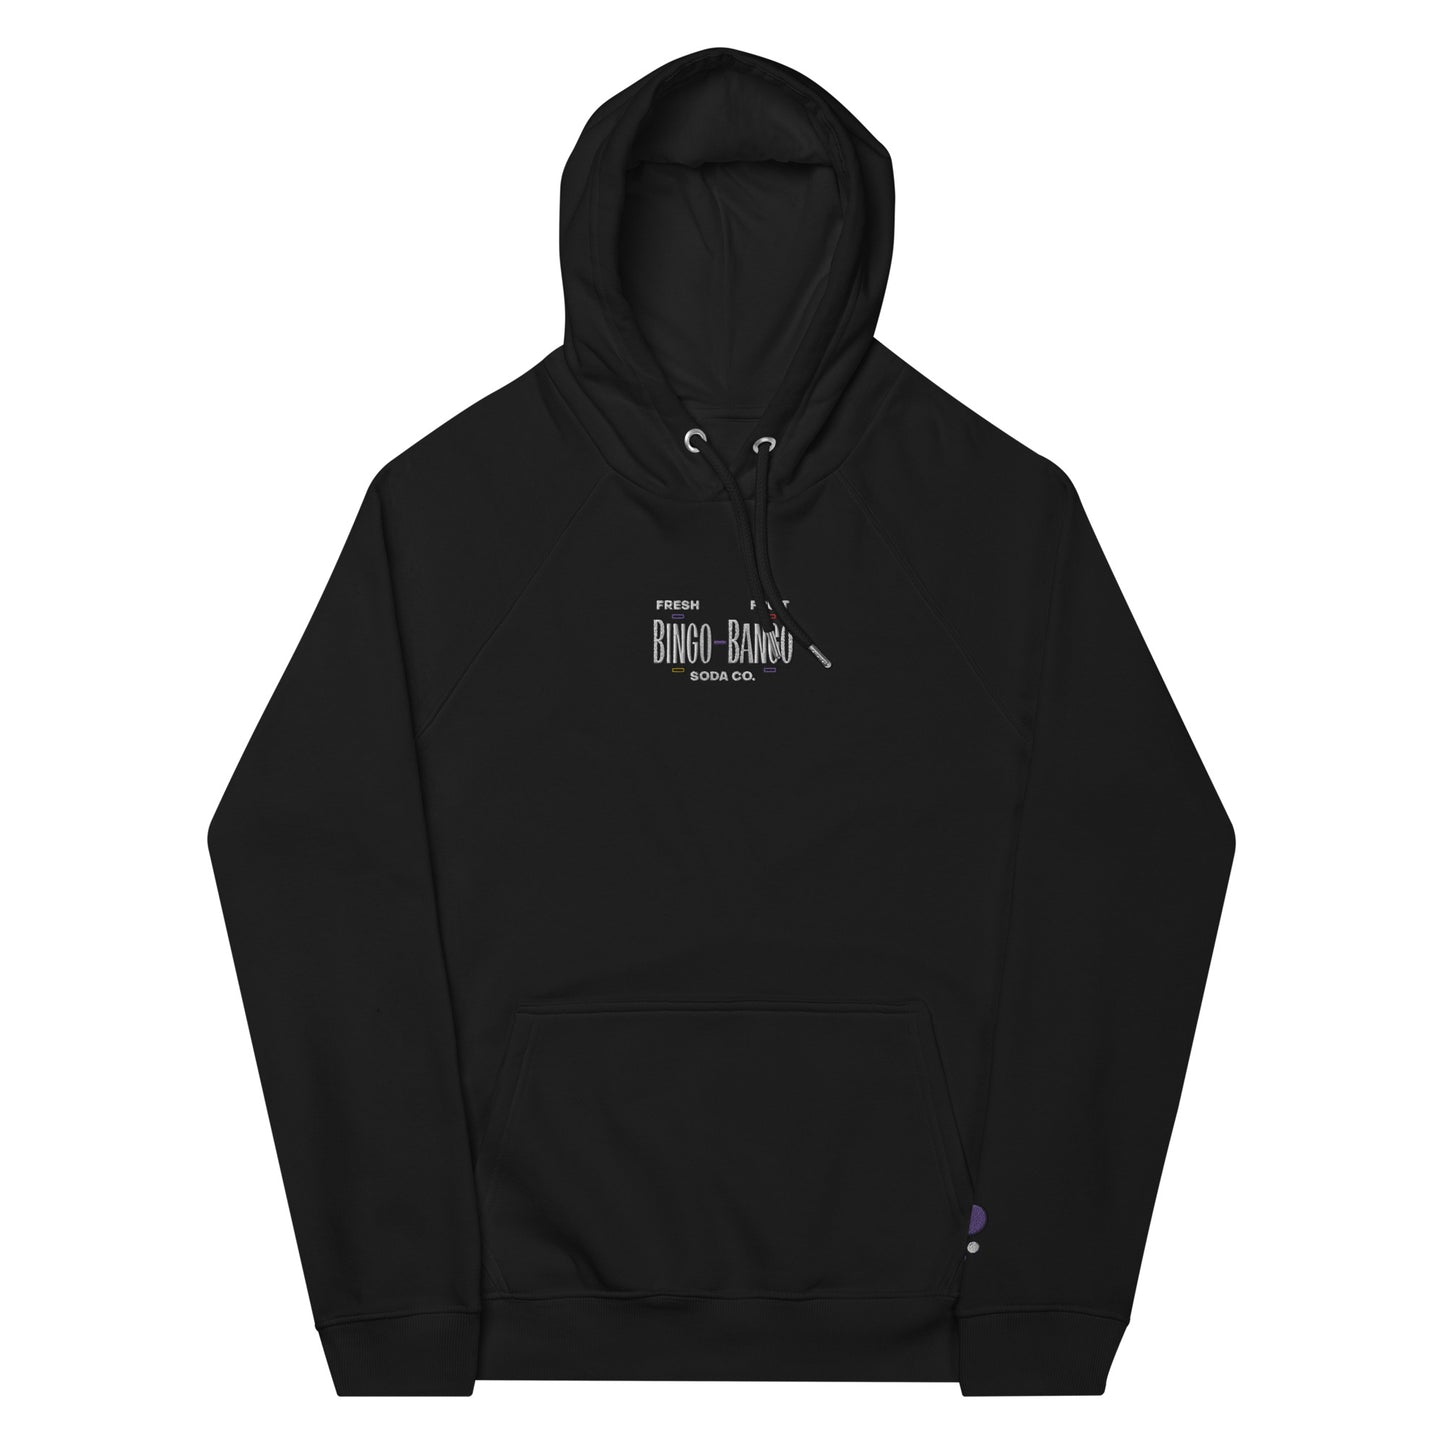 Unisex embroidered hoodie